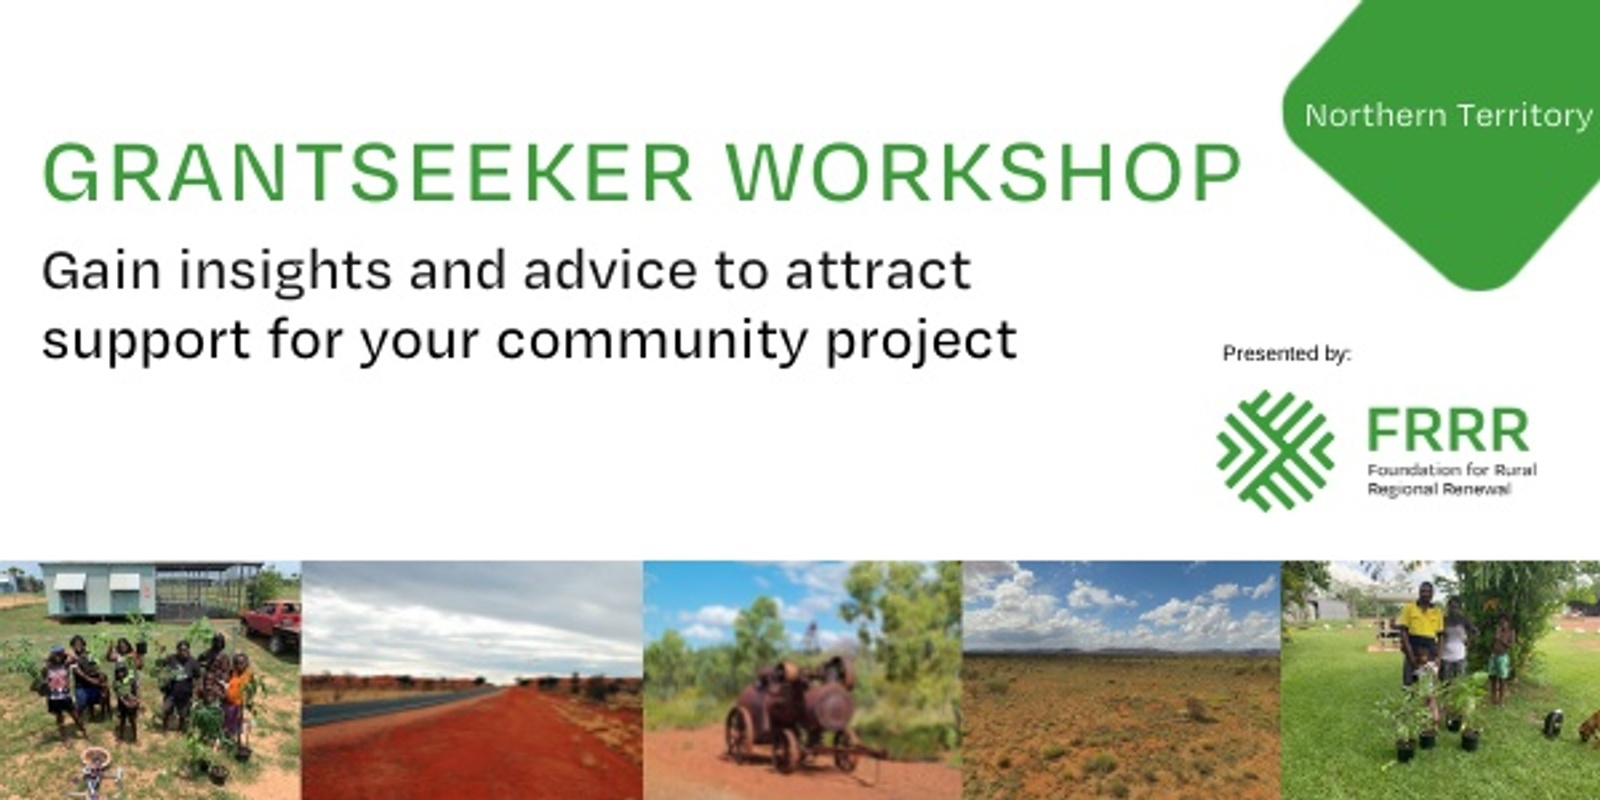 Banner image for FRRR Northern Territory Grantseeker Workshop